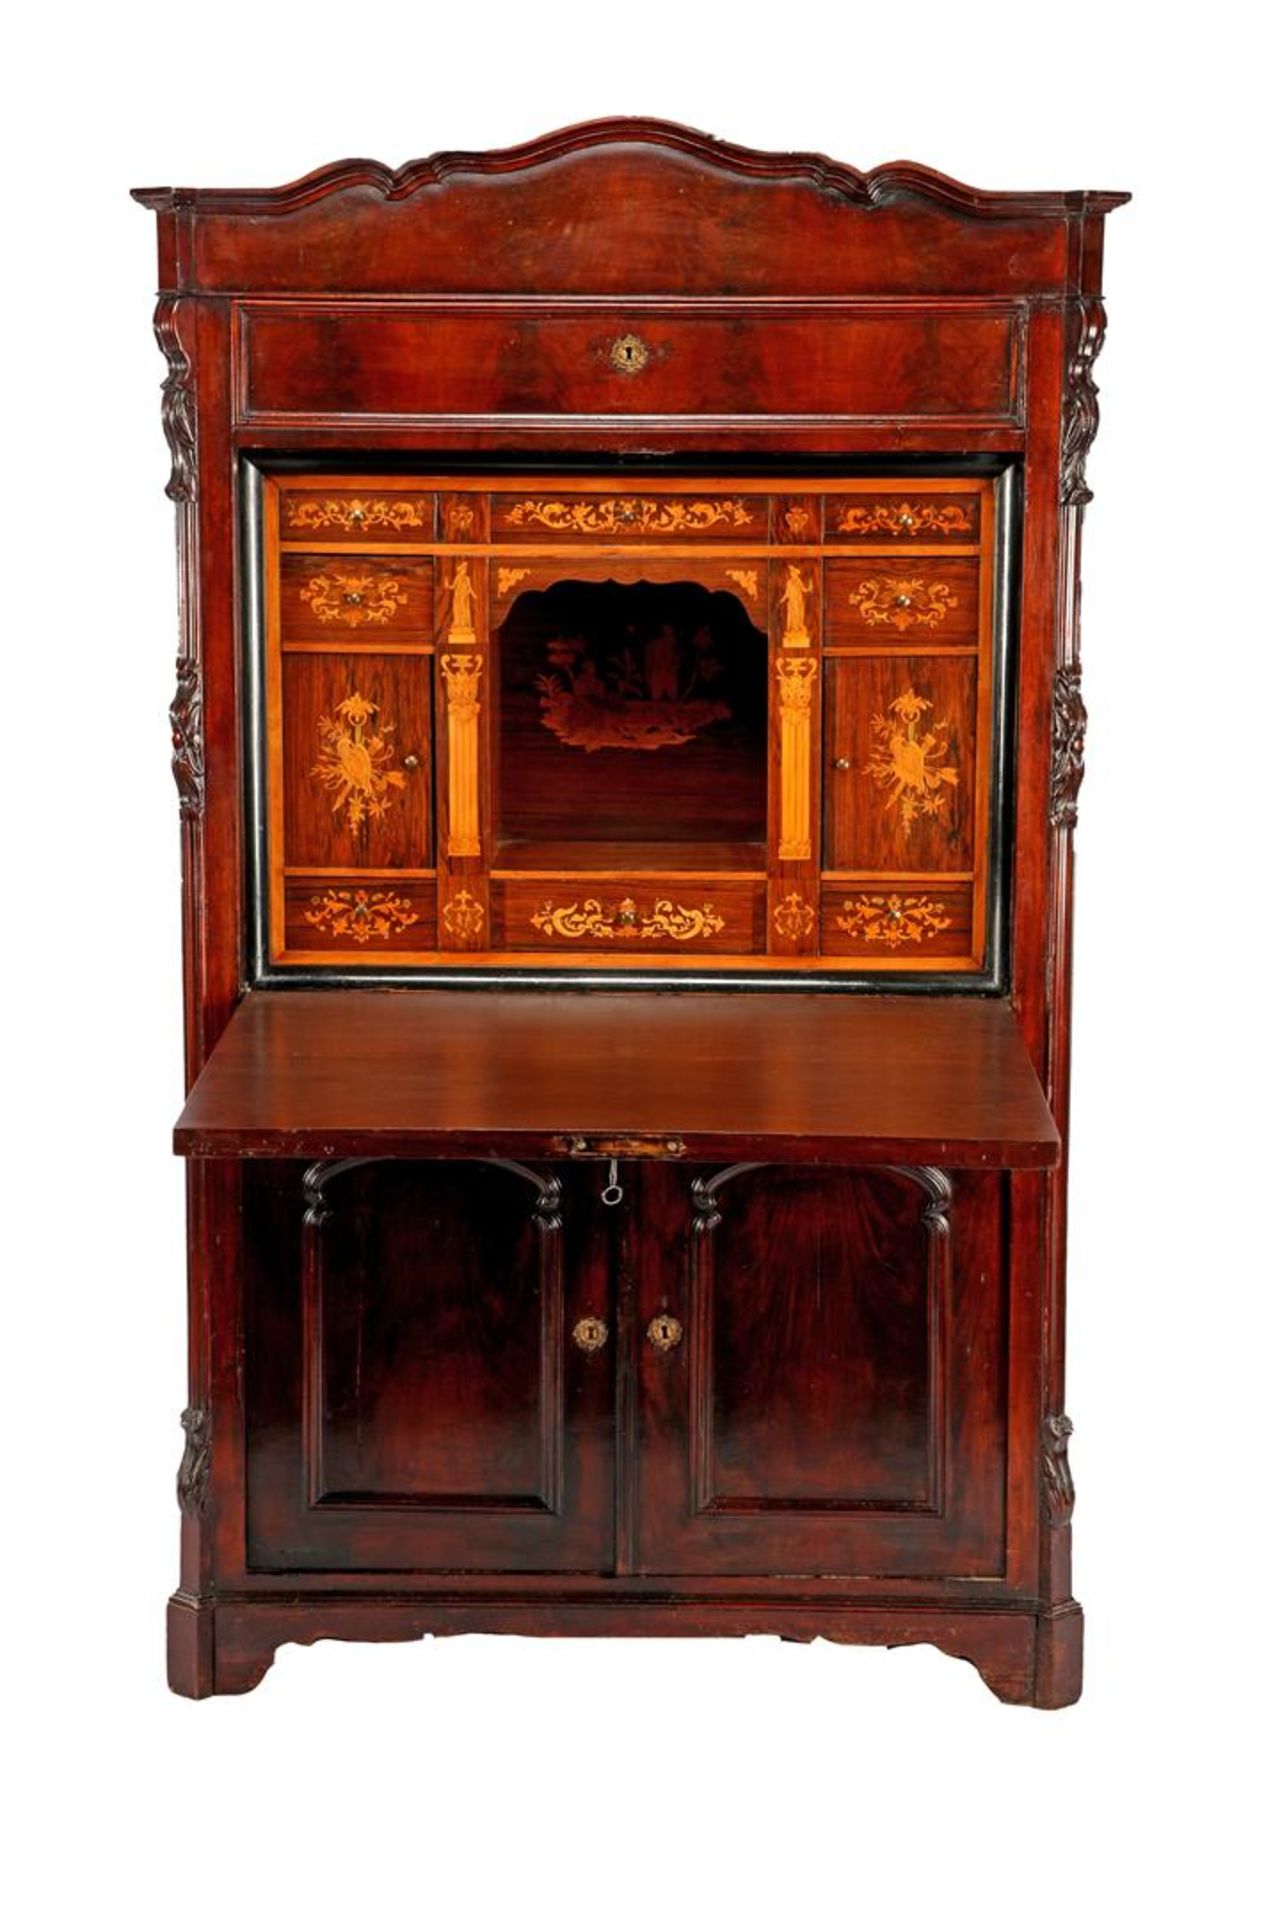 Mahogany veneer 19th century valve desk with beautiful intarsia nesting 168 cm high, 107 cm wide, 47